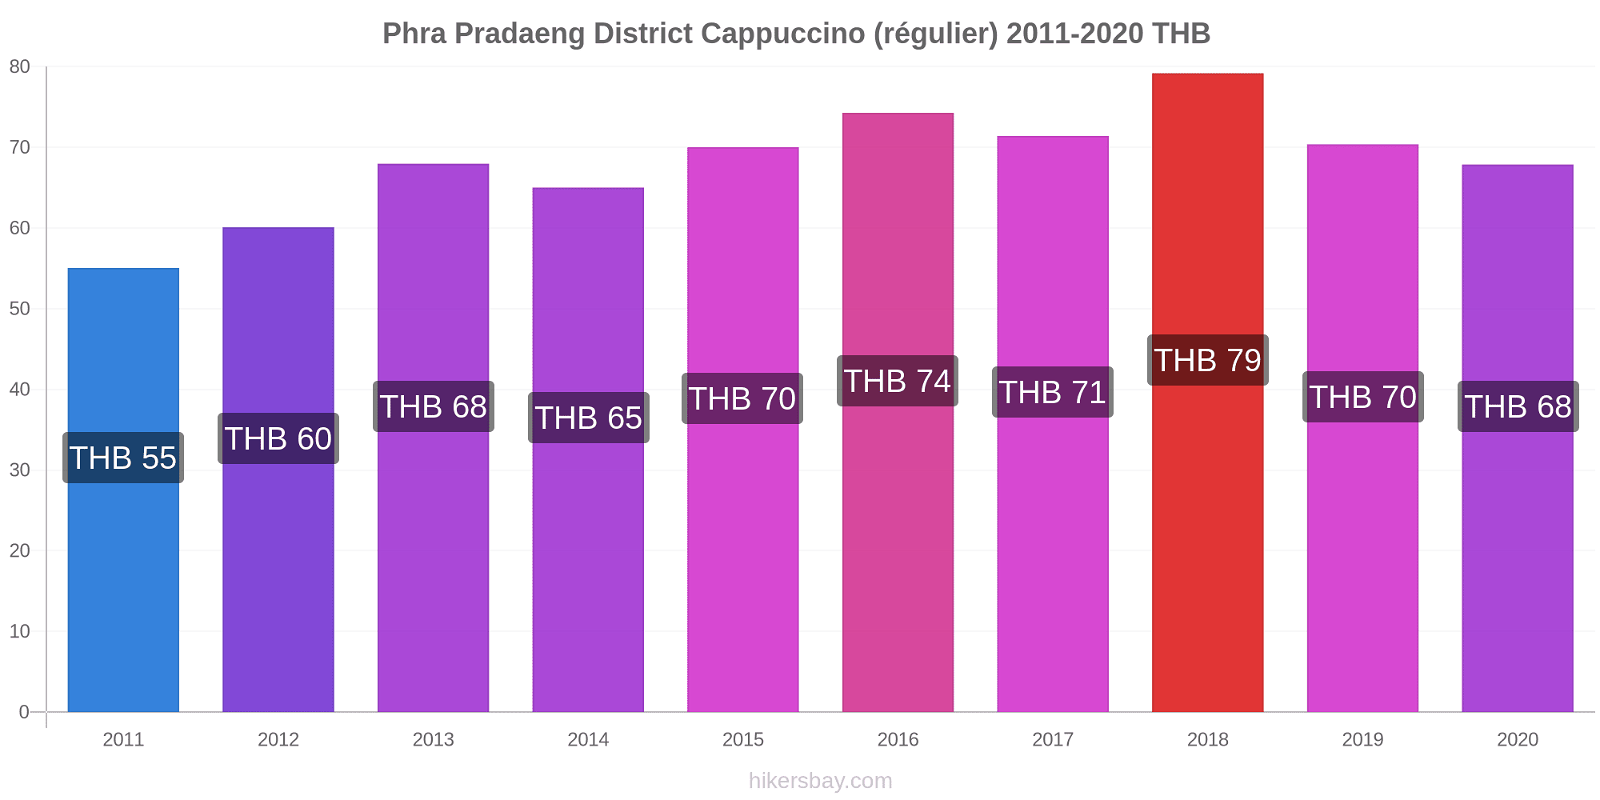 Phra Pradaeng District changements de prix Cappuccino (régulier) hikersbay.com